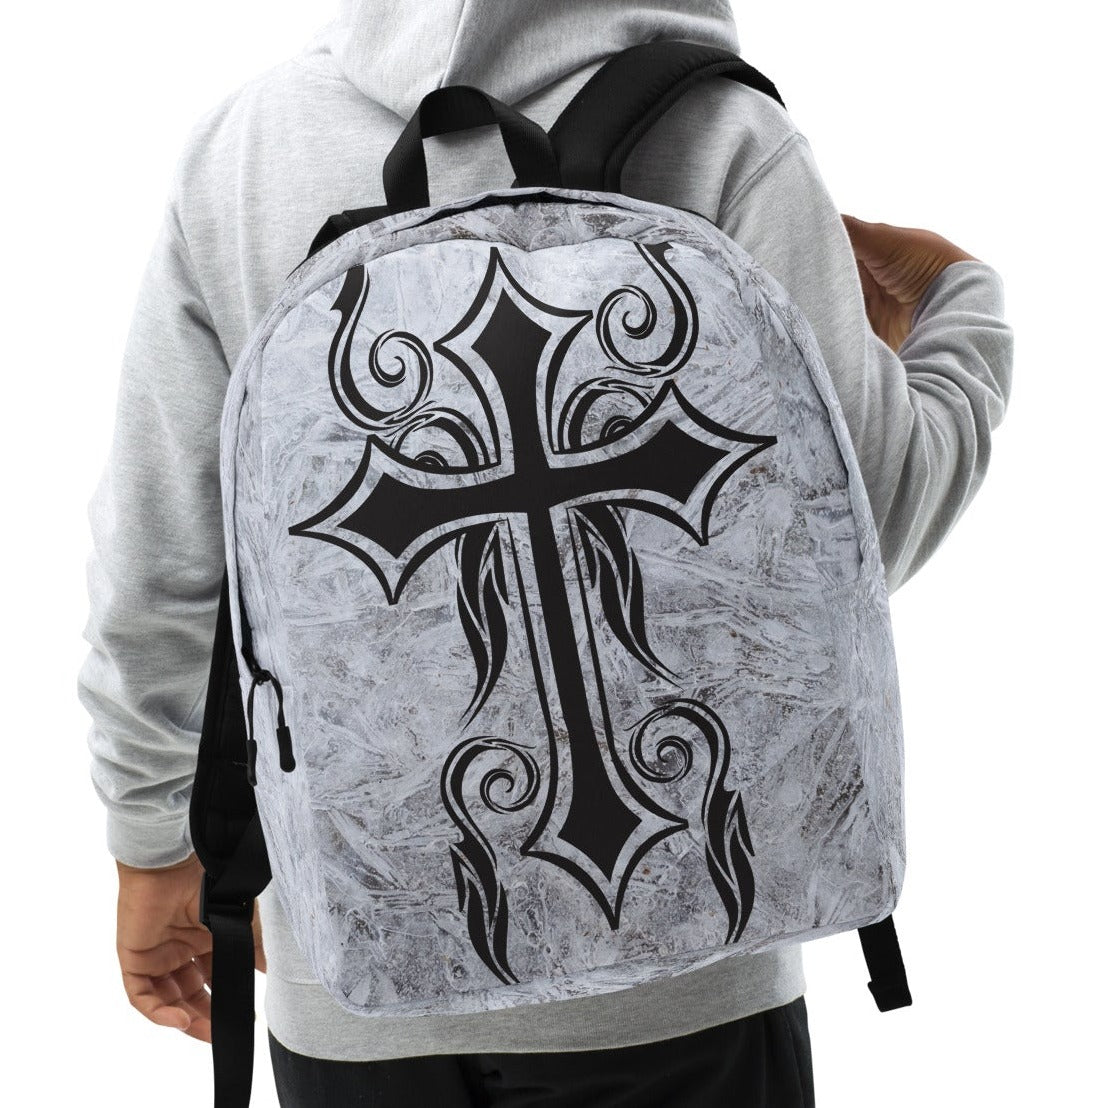 Minimalist Backpack Cross Crucifix Design